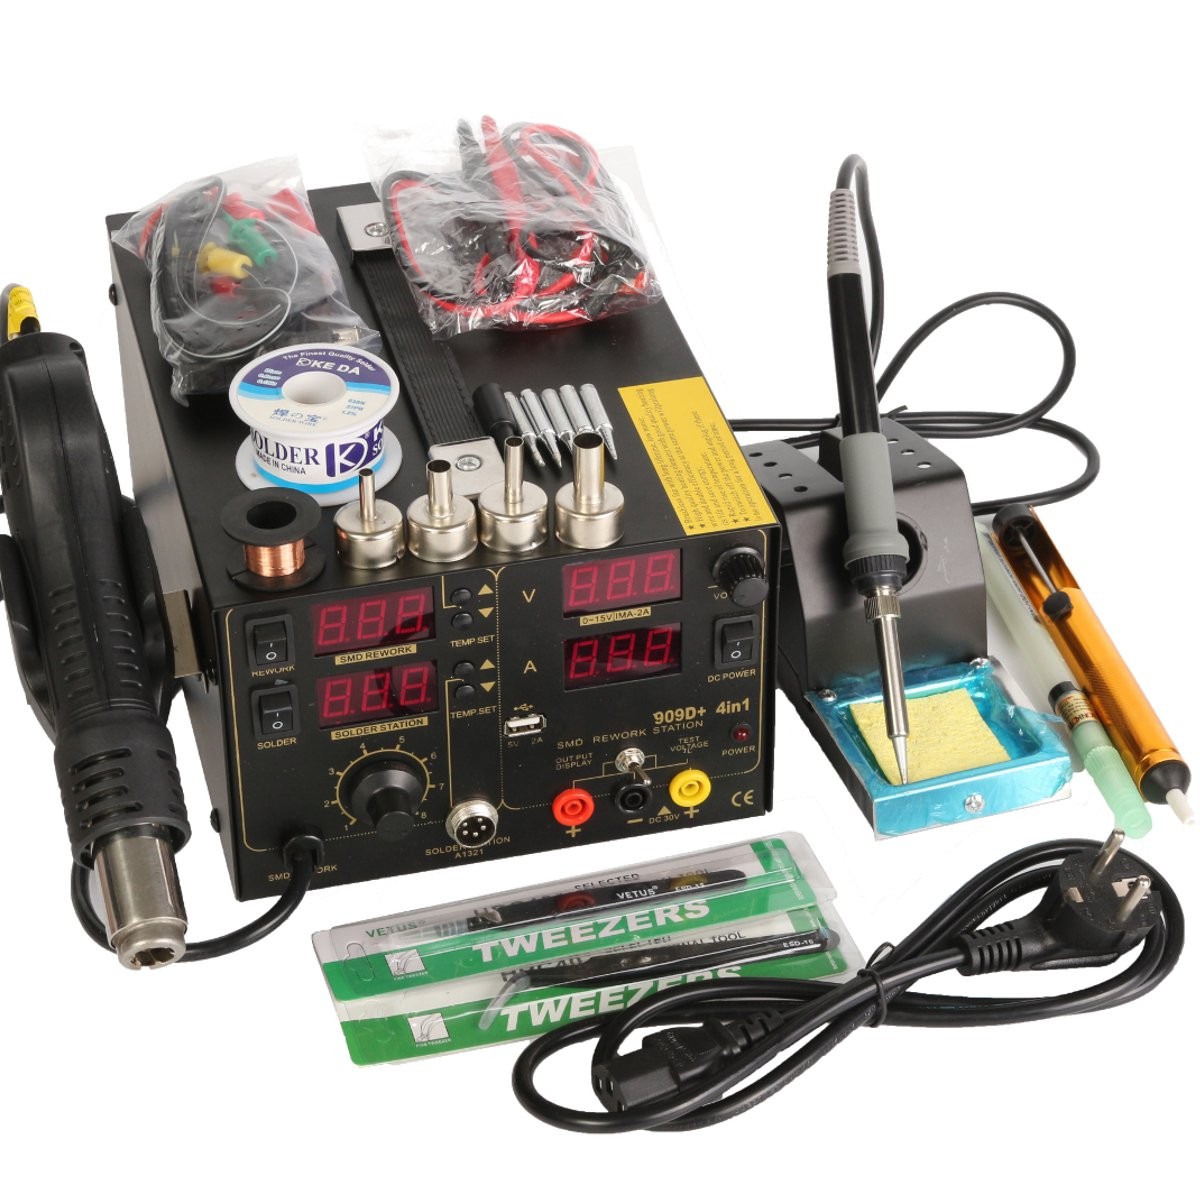 Saike-220V-909D-Rework-Soldering-Station-Hot-Heat-Air-Nozzle-DC-USB-Power-Supply-220V-AC-EU-Plug-1063967-2